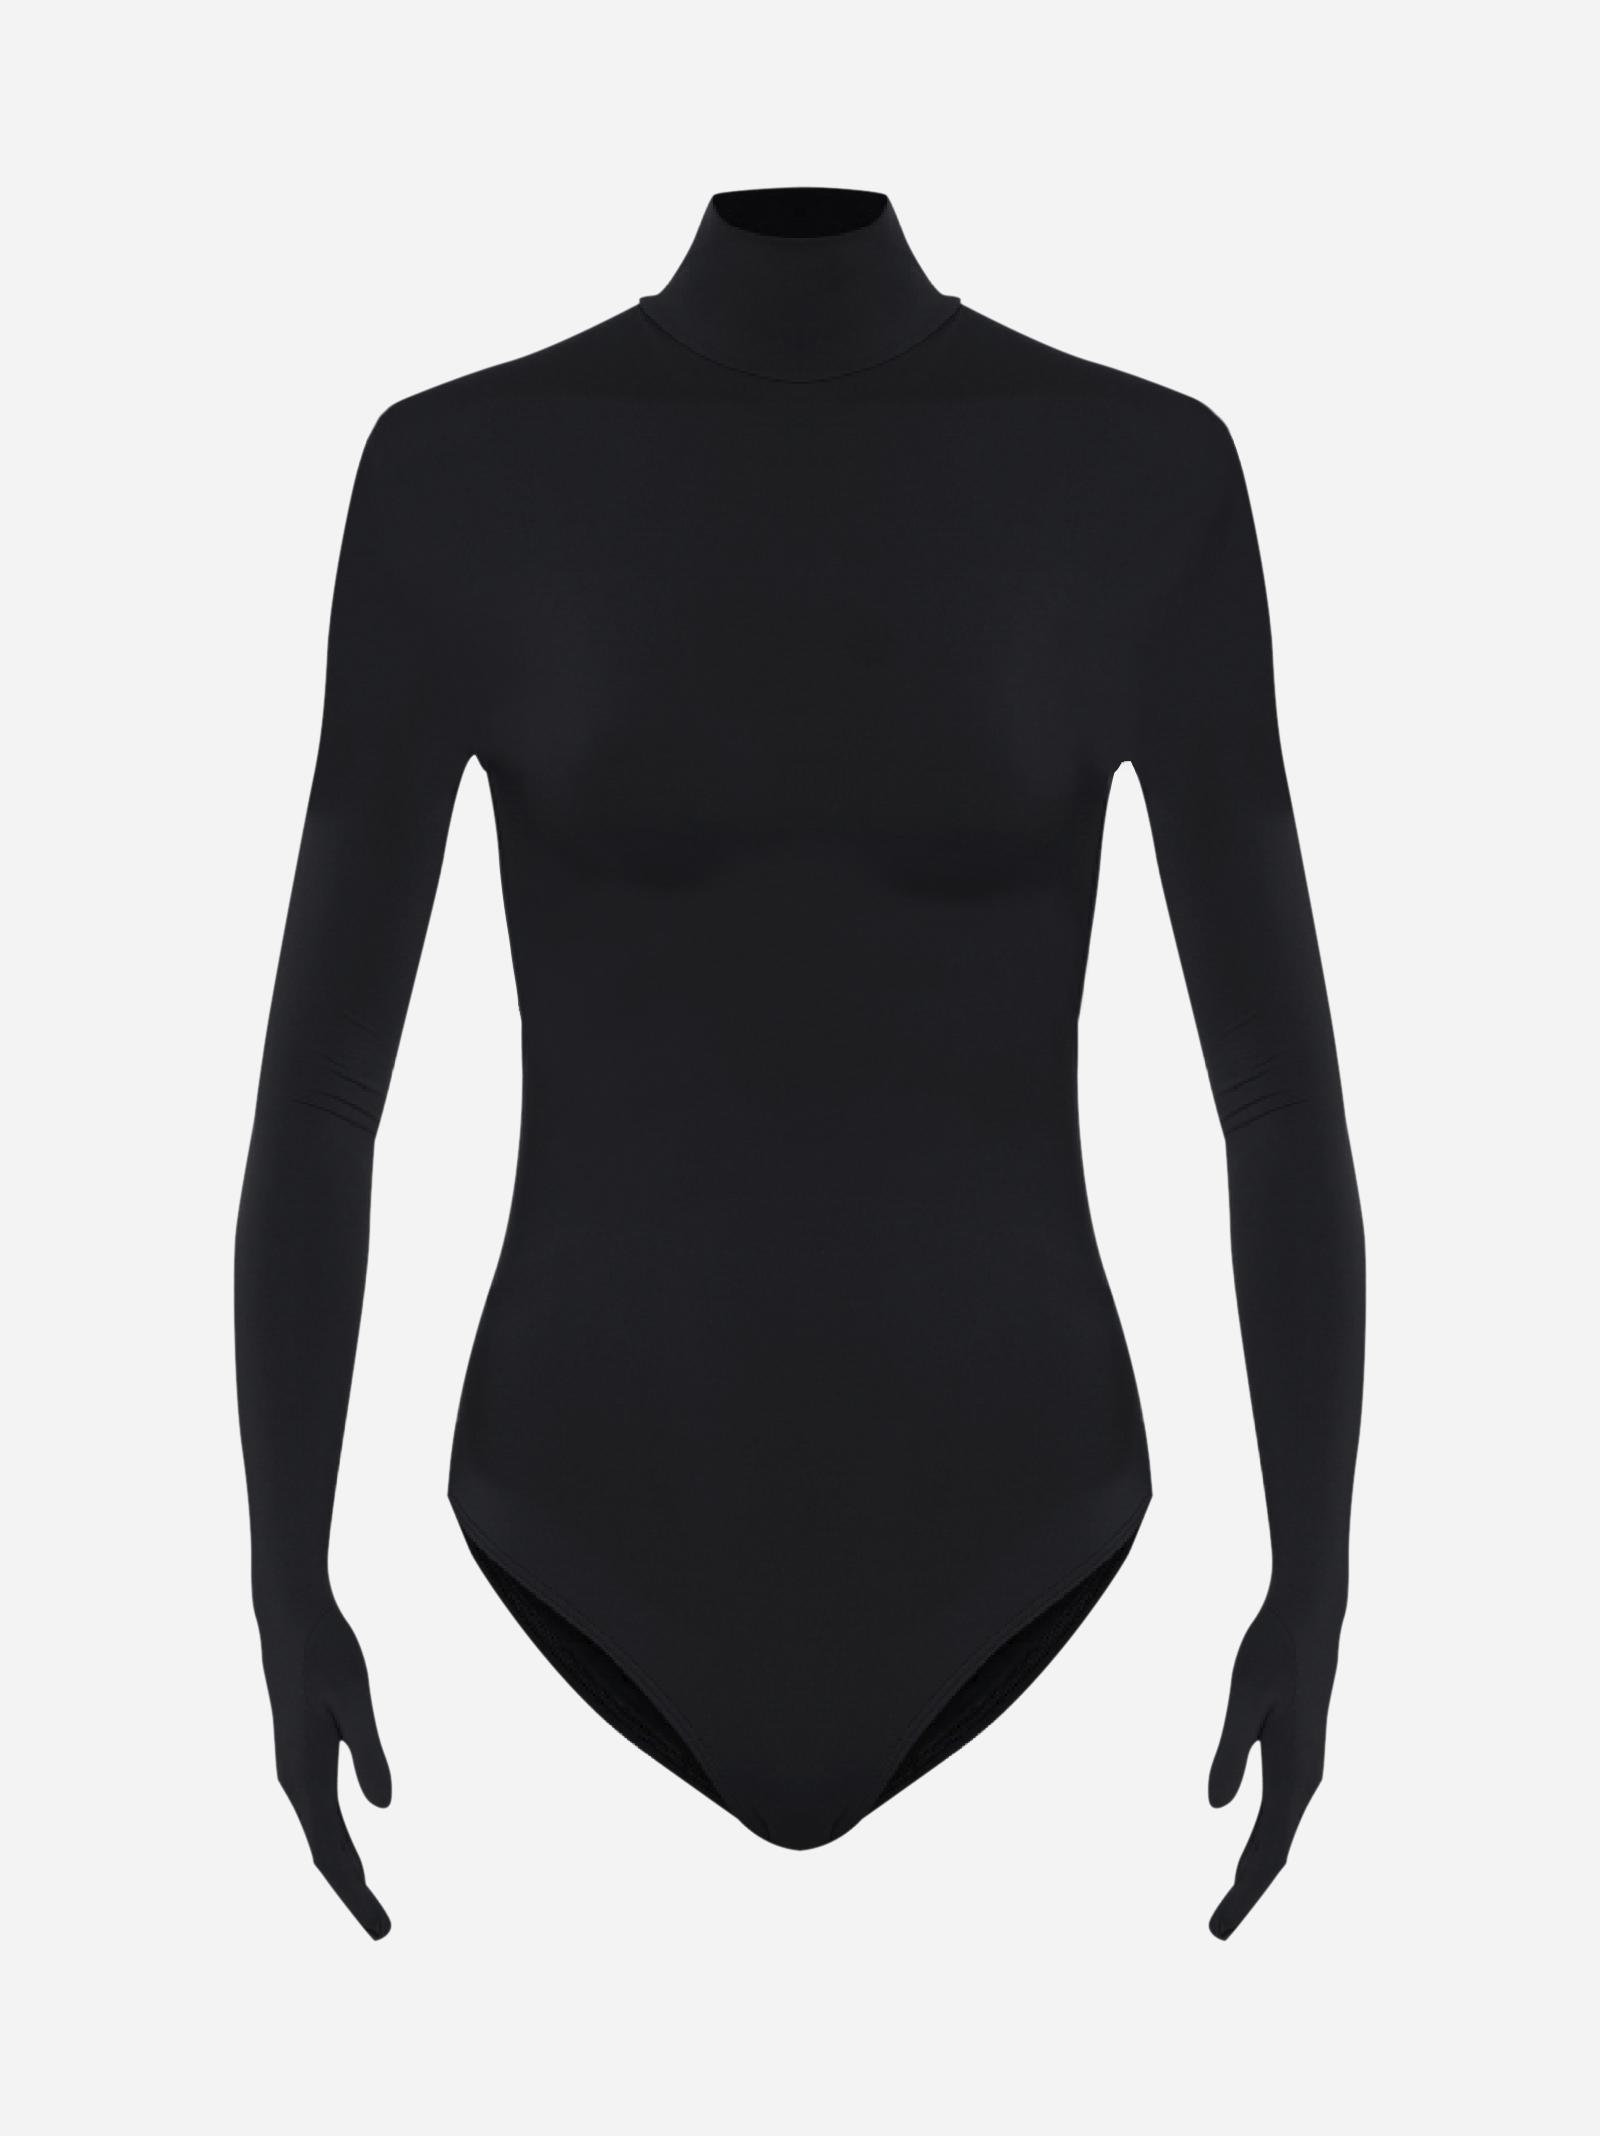 Vetements Built-in Gloves Bodysuit in Black | Lyst